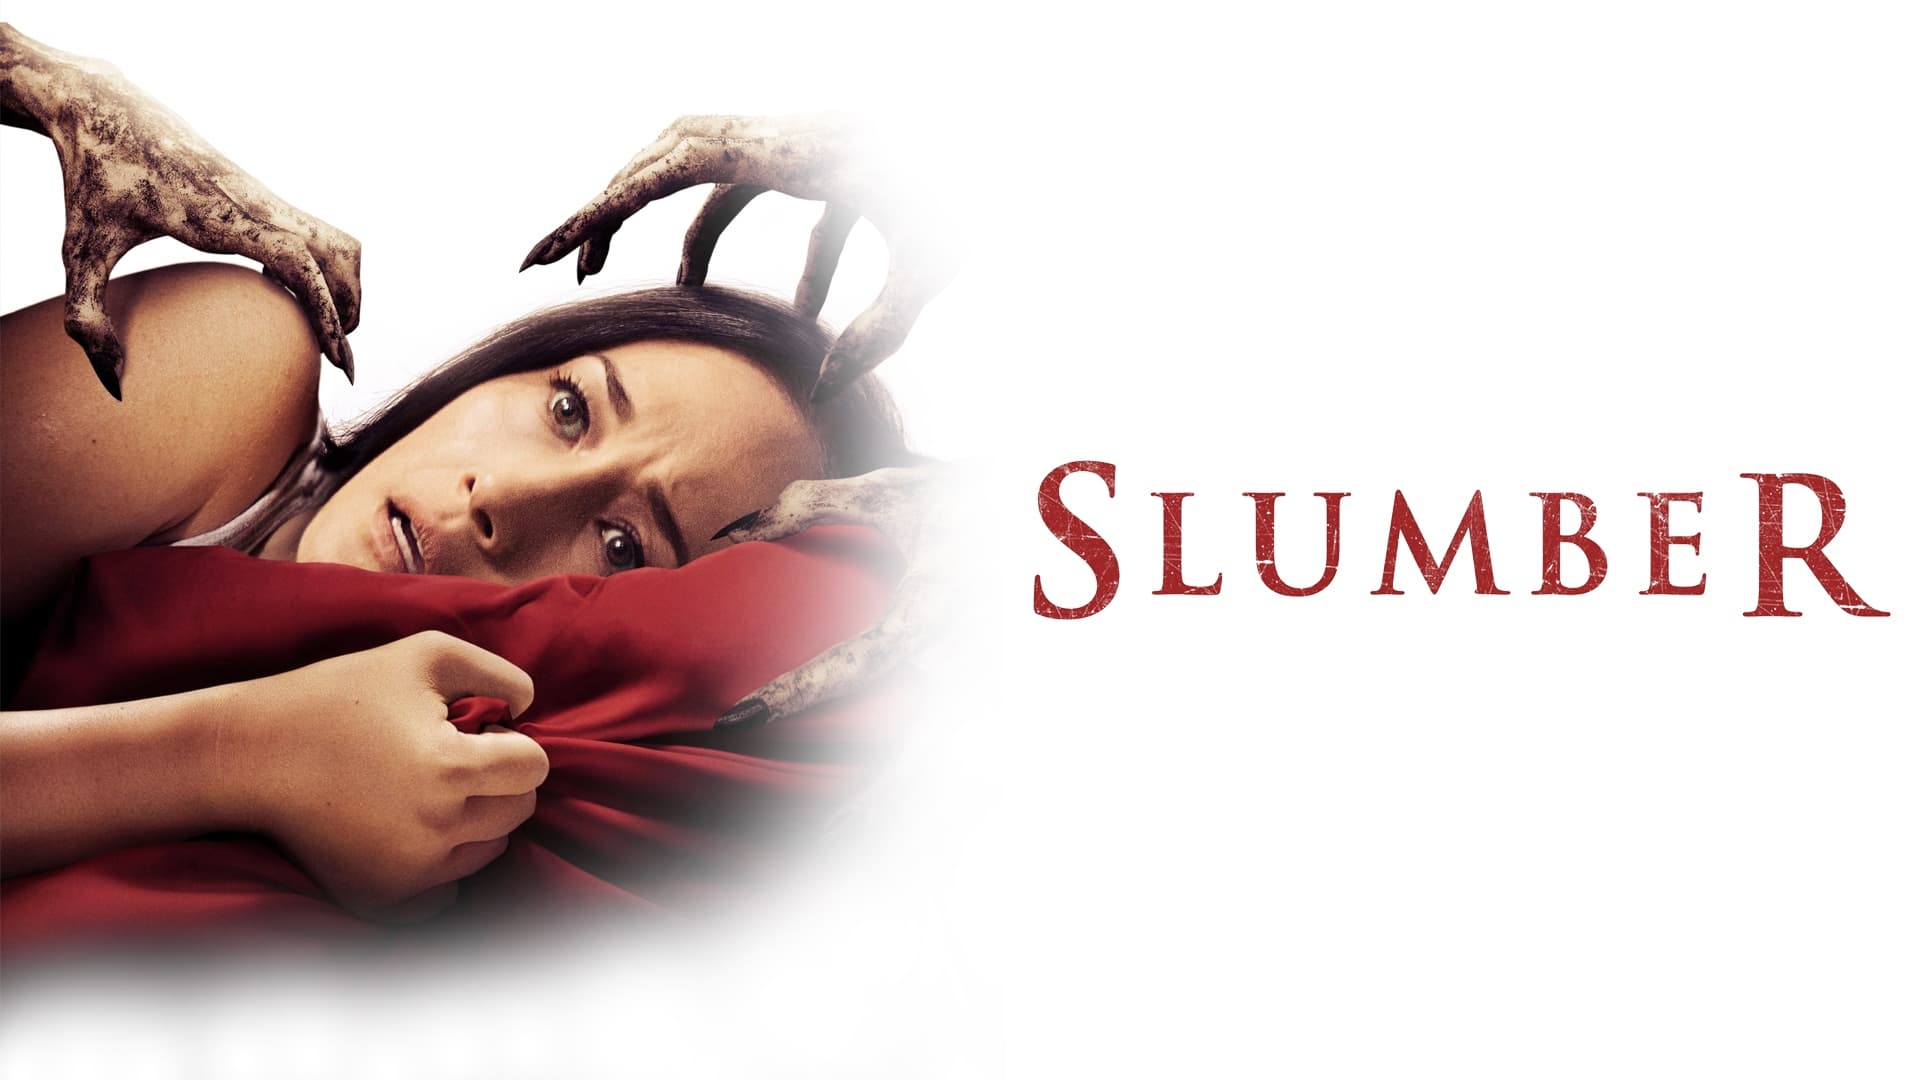 Slumber